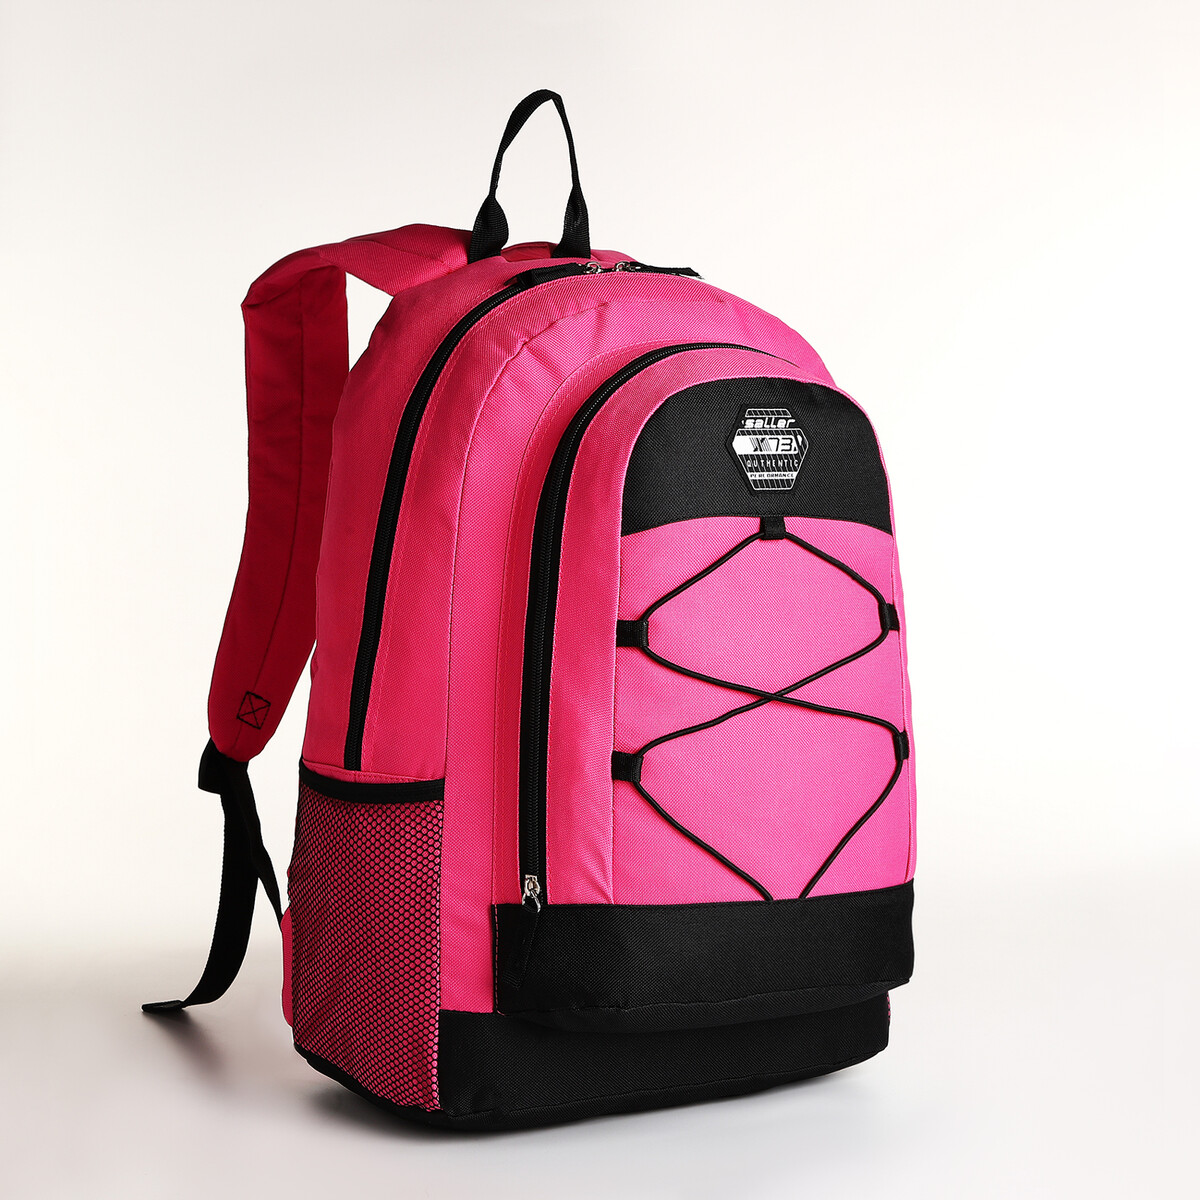 Рюкзак молодежный на молнии, 3 кармана, цвет розовый рюкзак молодежный на молнии из текстиля 2 кармана розовый